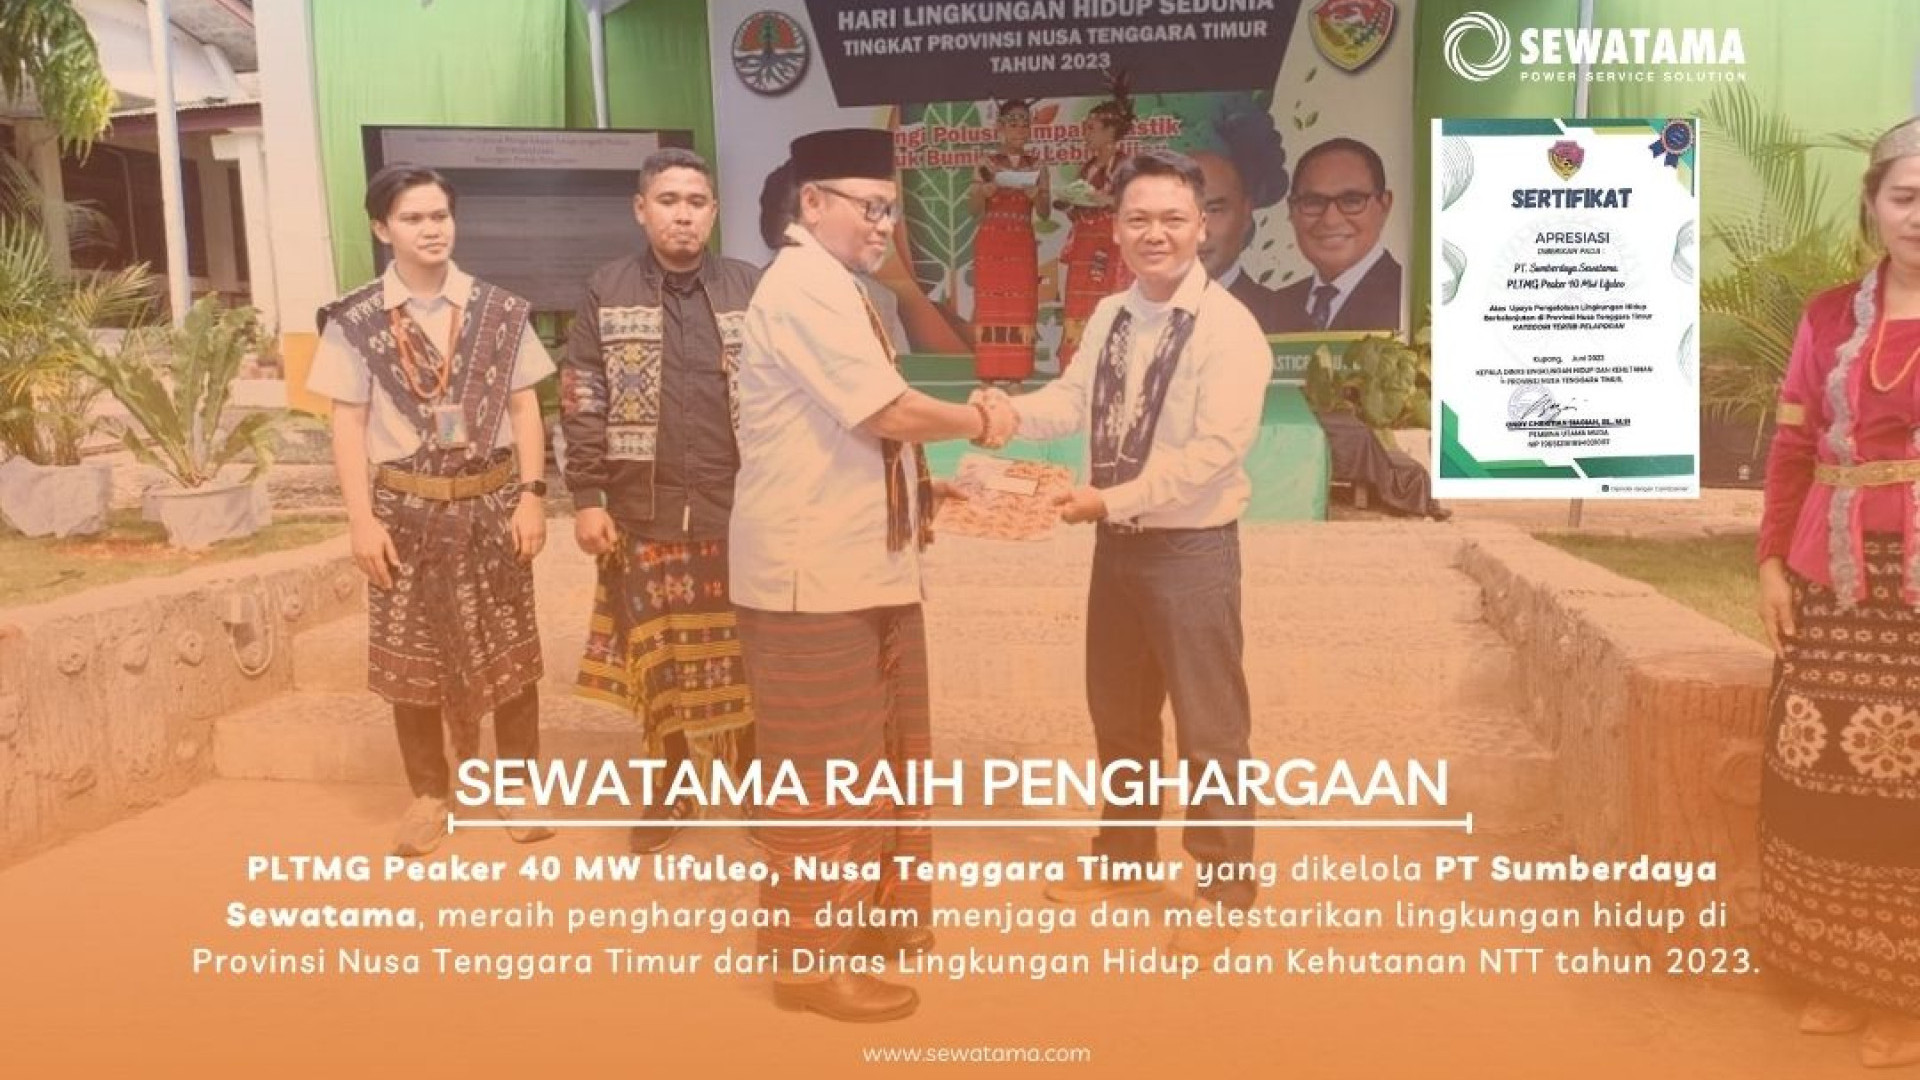 Sewatama Awarded an Environmental Award